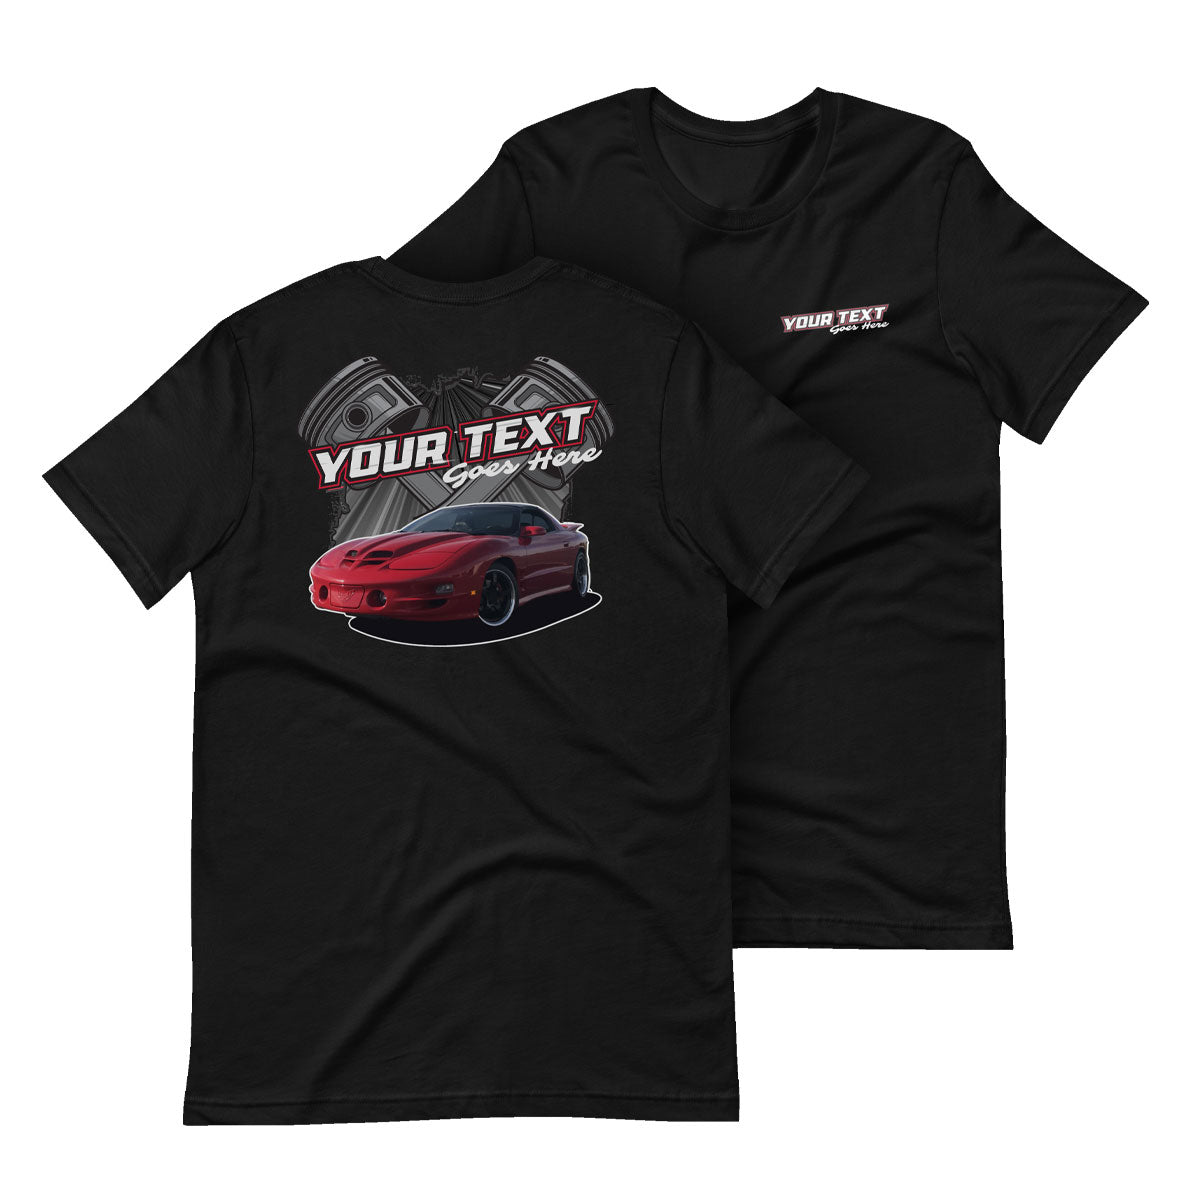 Custom | Vehicle T-Shirt